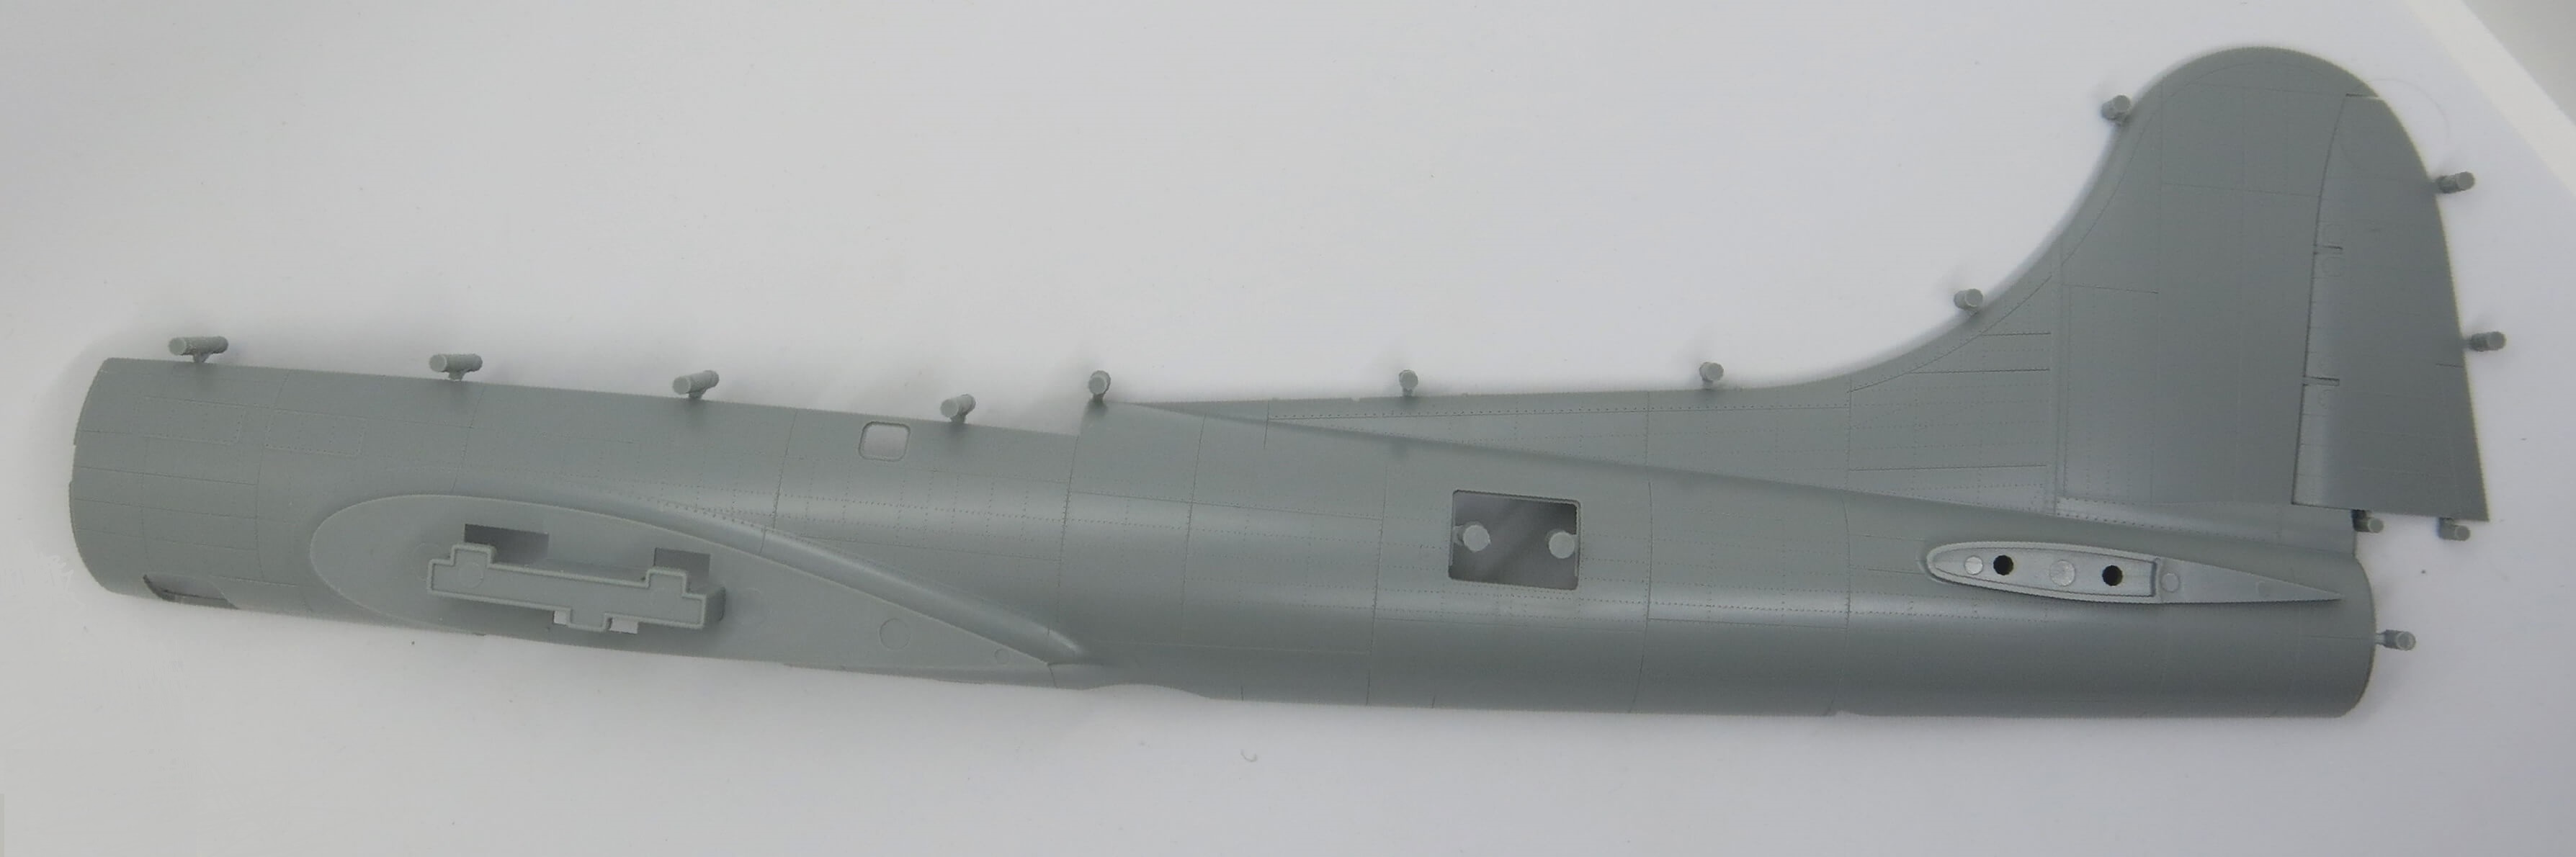 B-17G Early Production HK-model, trup